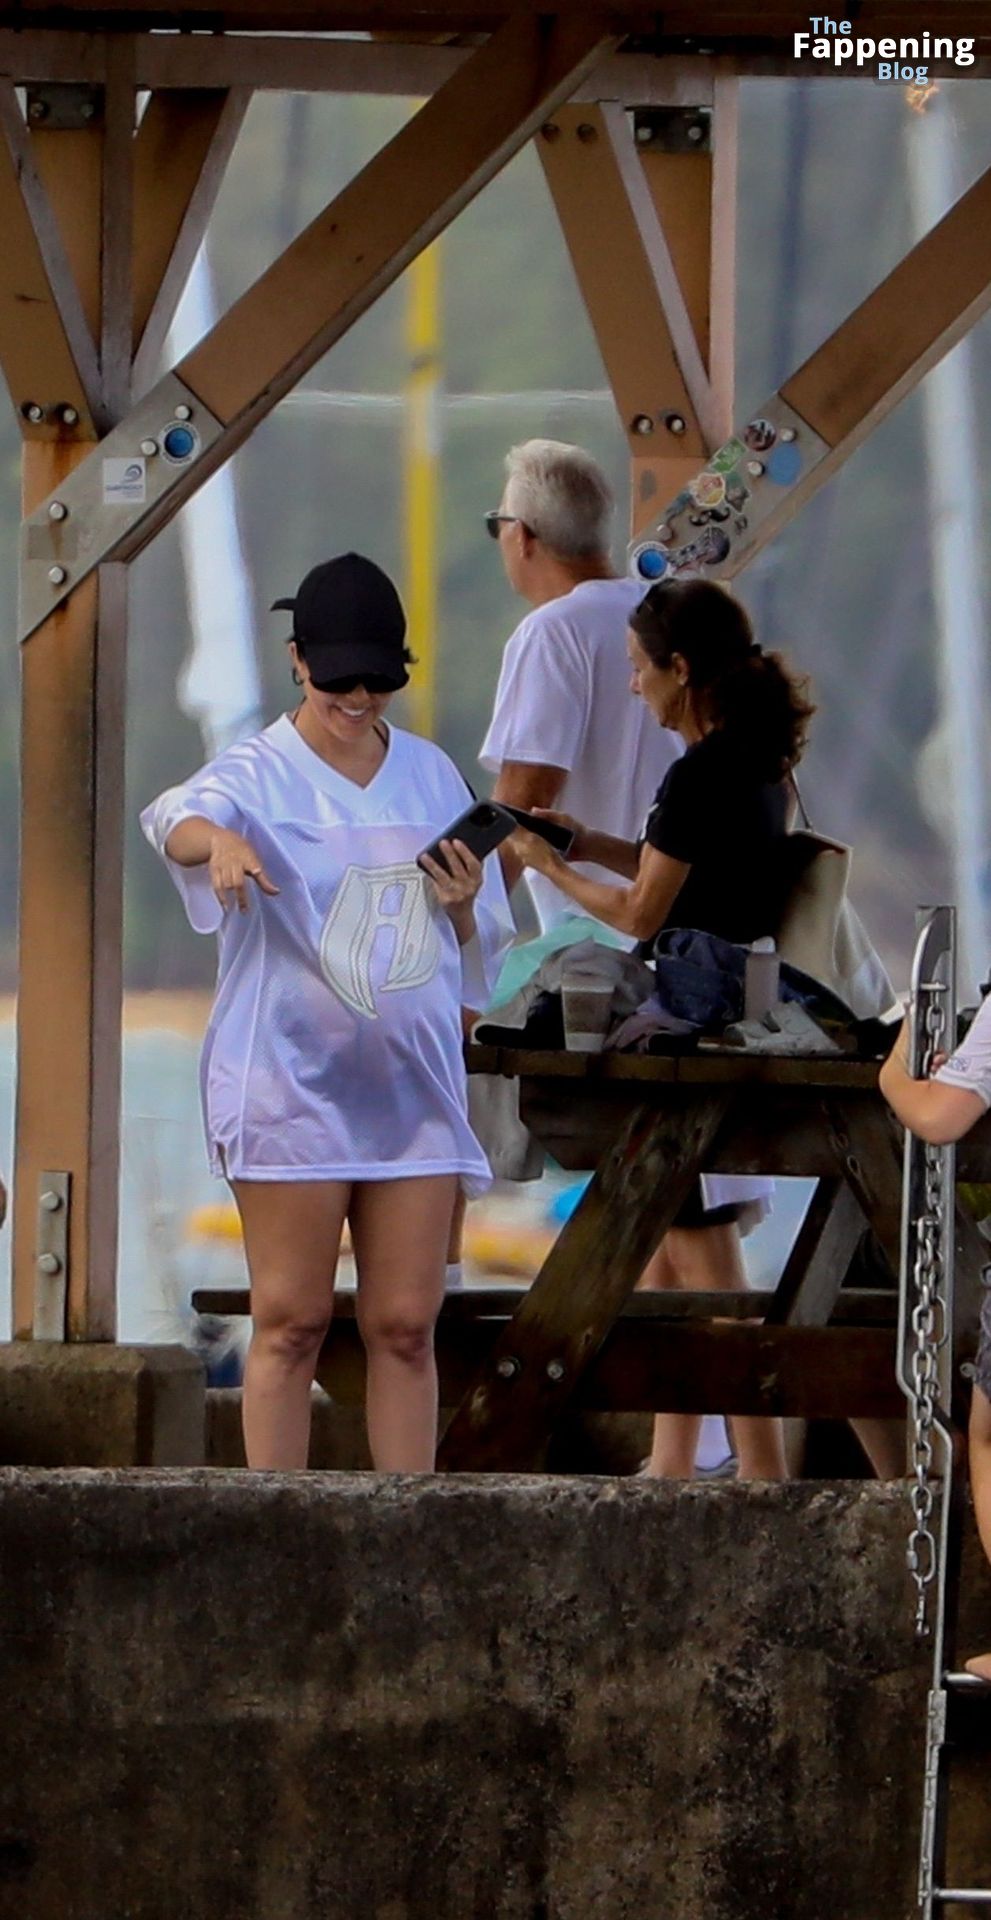 Kourtney Kardashian Embraces Serene Kauai Beach Retreat with Growing Baby Bump (29 Photos)